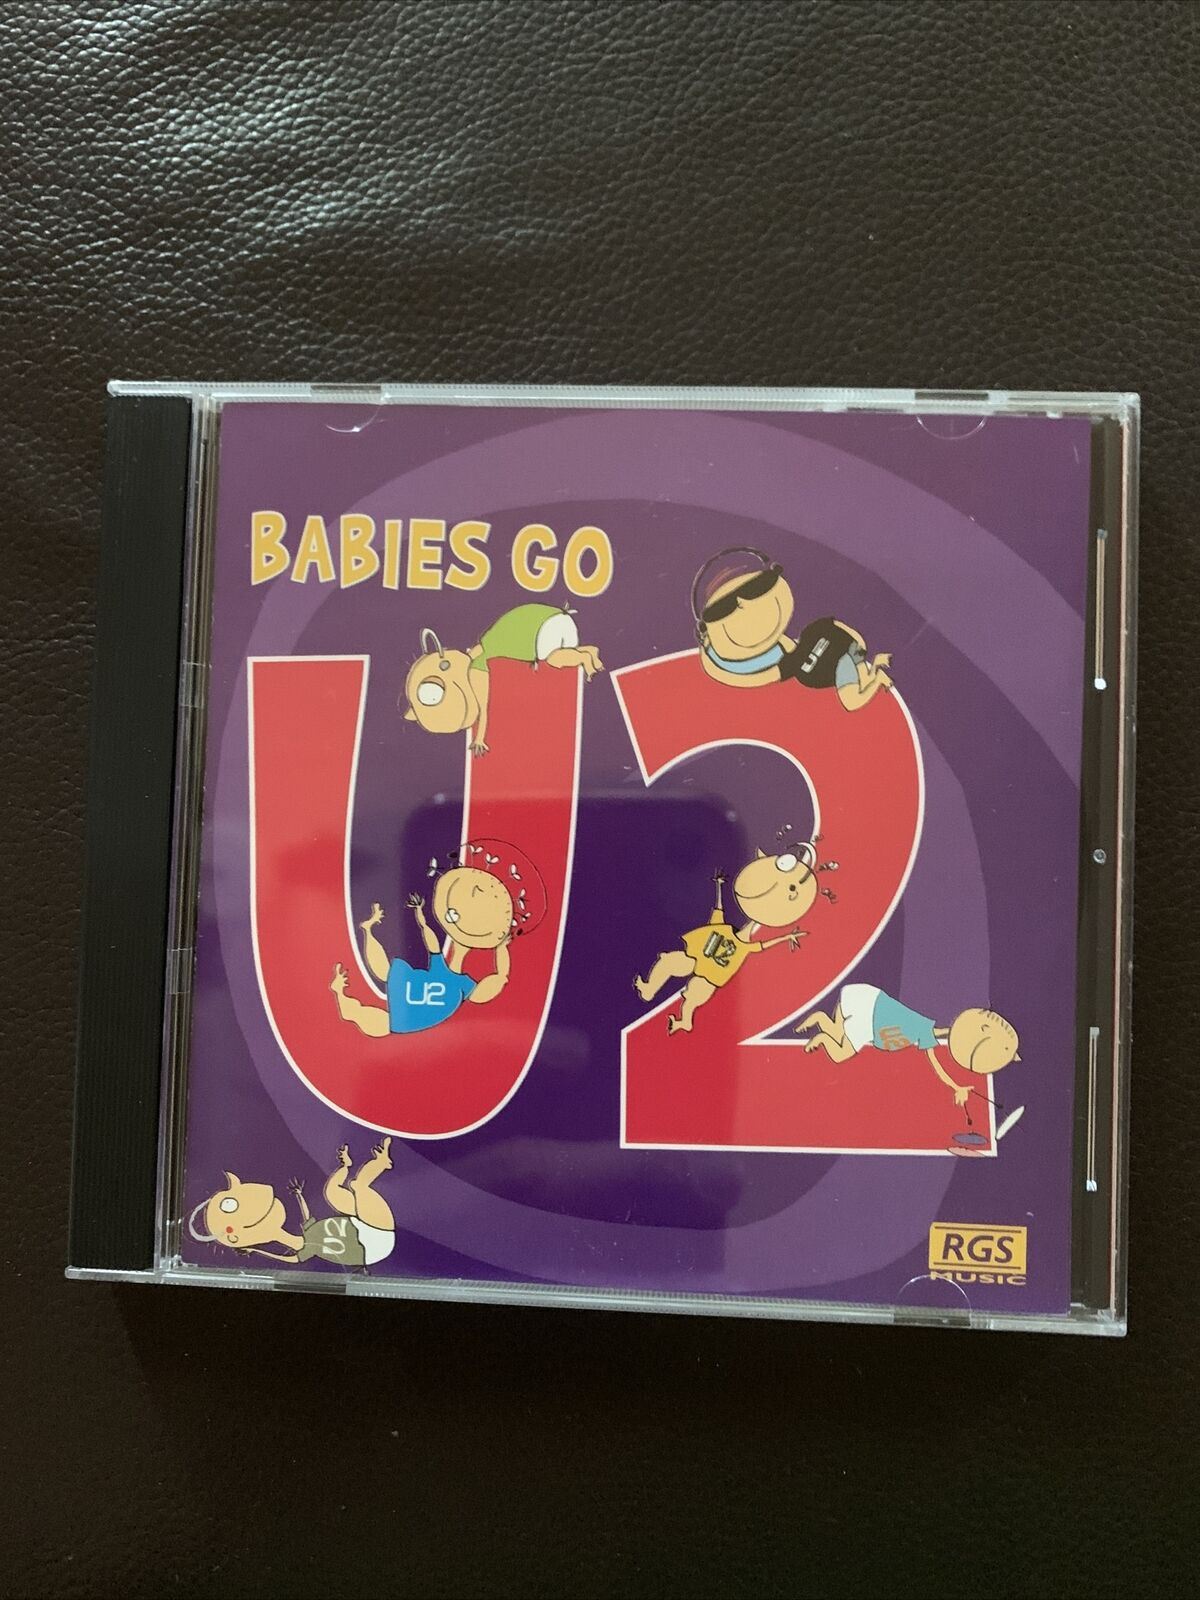 Babies Go U2 for Children Lullaby (CD, 2005)